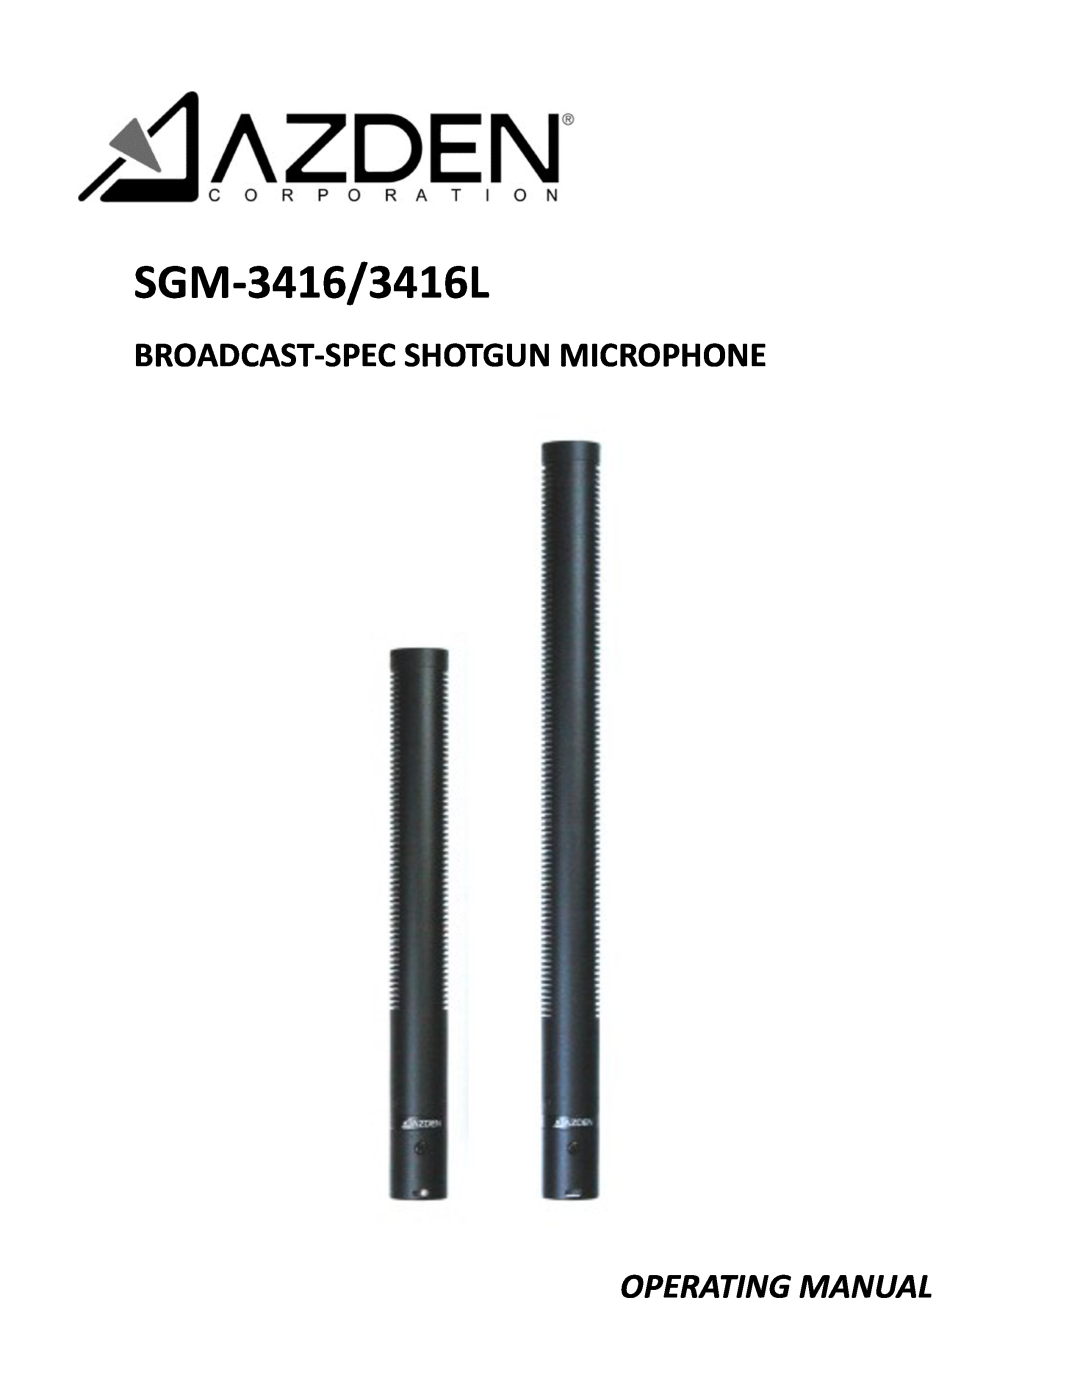 Azden SGM3416L manual SGM-3416/3416L, Broadcast-Spec Shotgun Microphone, Operating Manual 